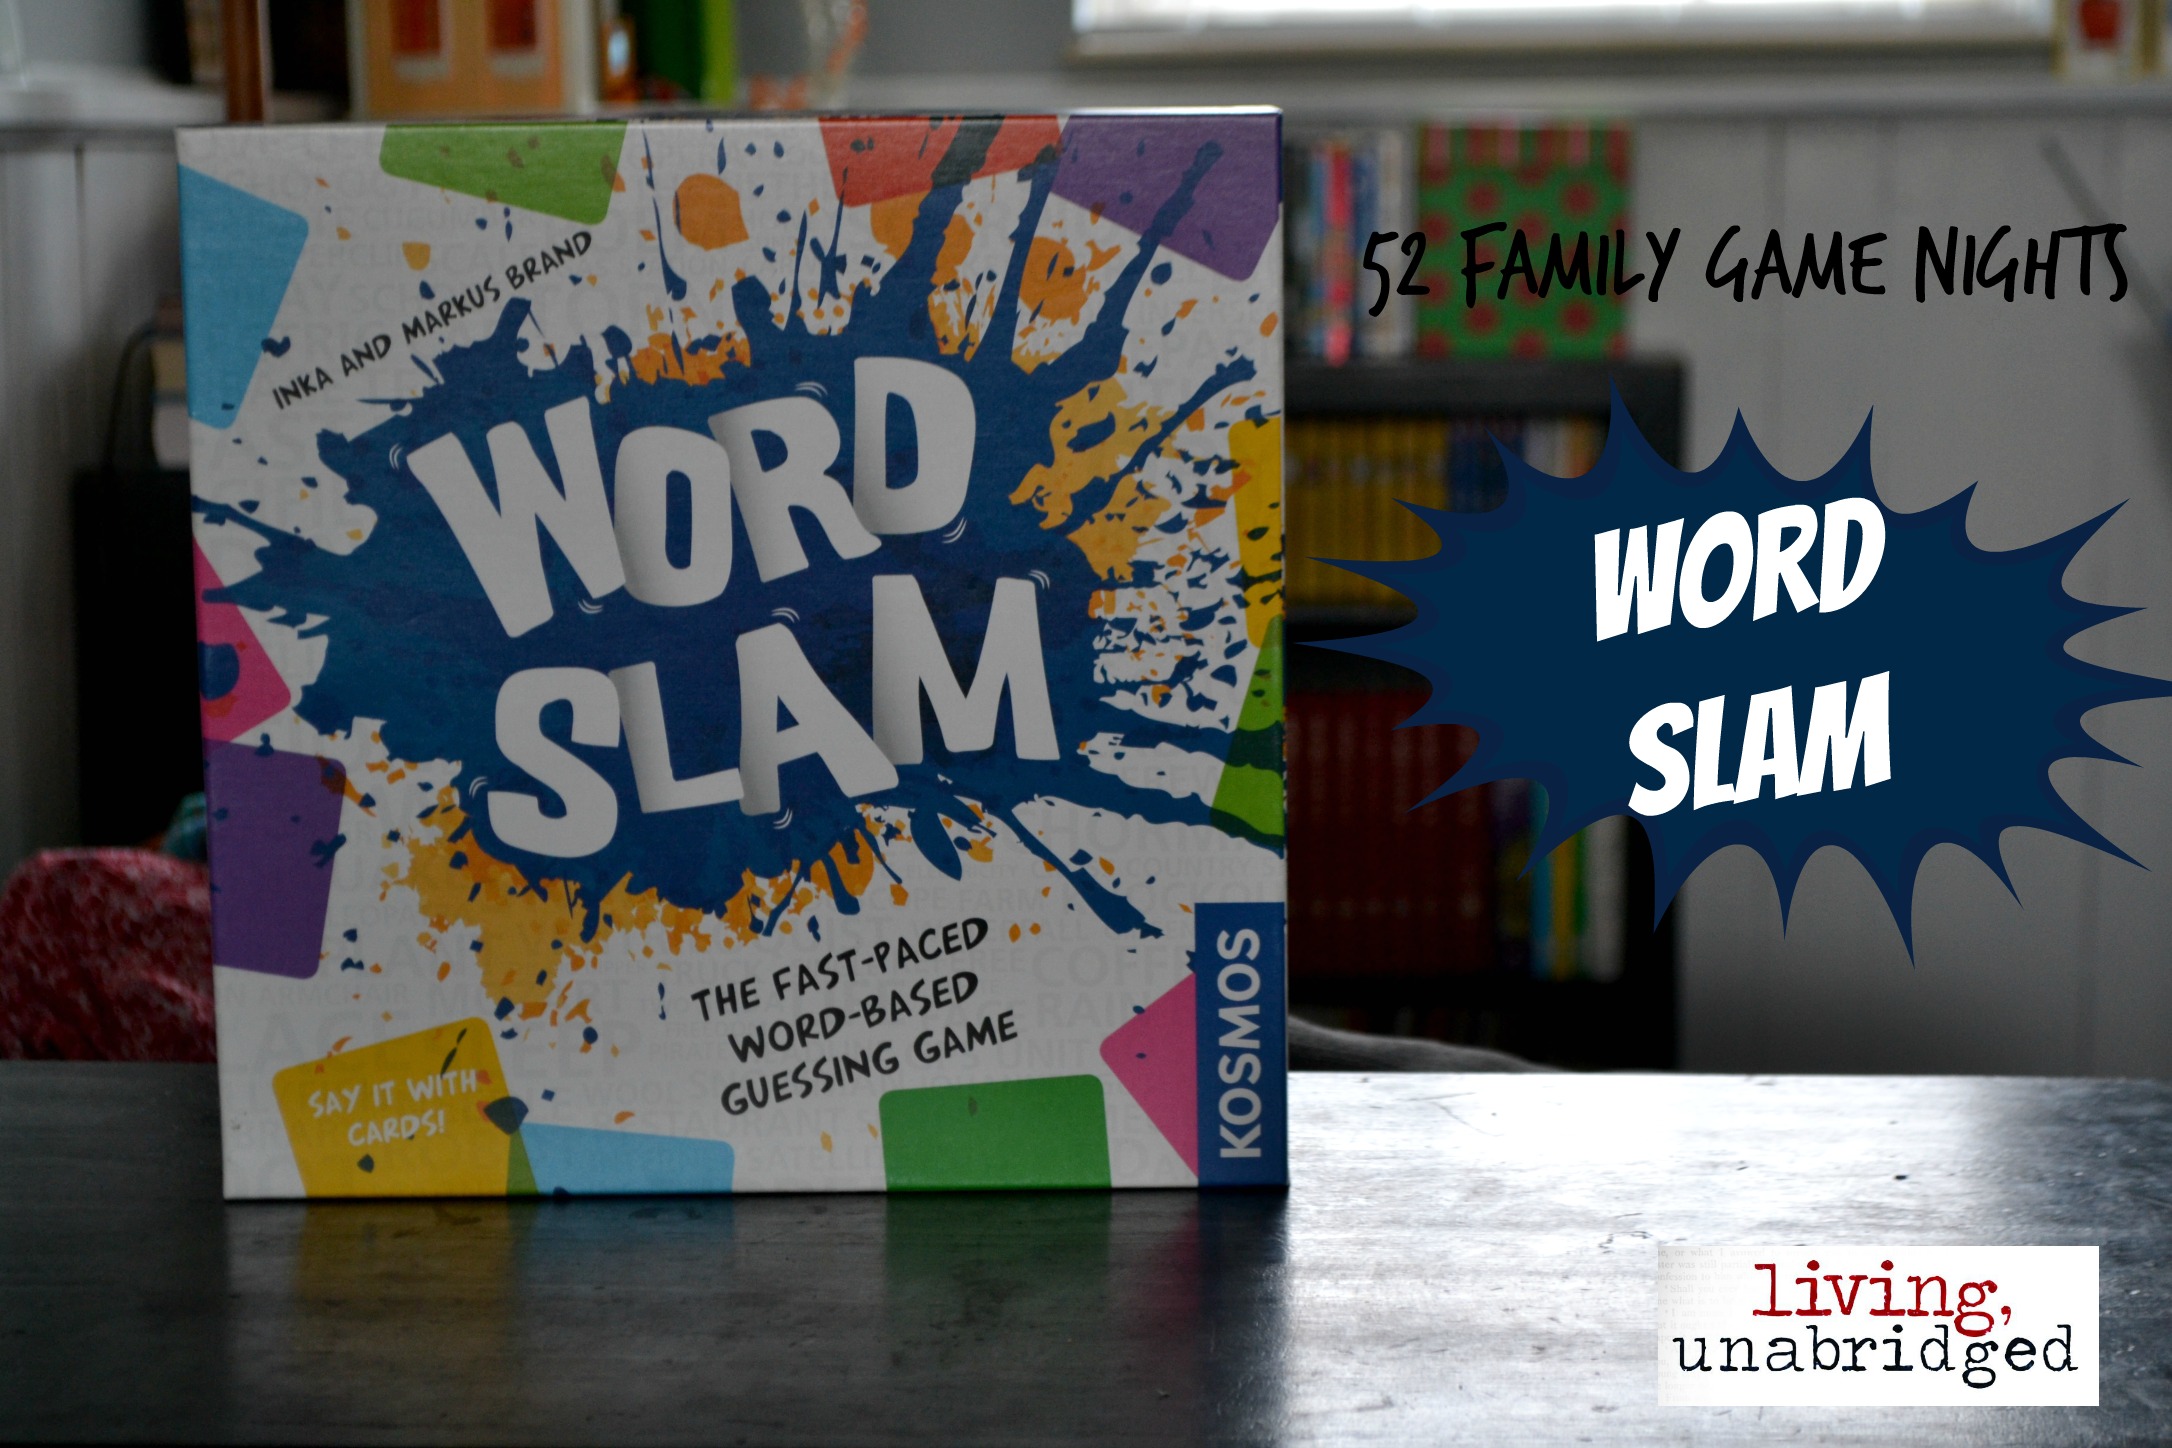 One night word. Слэм слово. Night Word. Slam Word. 52 Family.